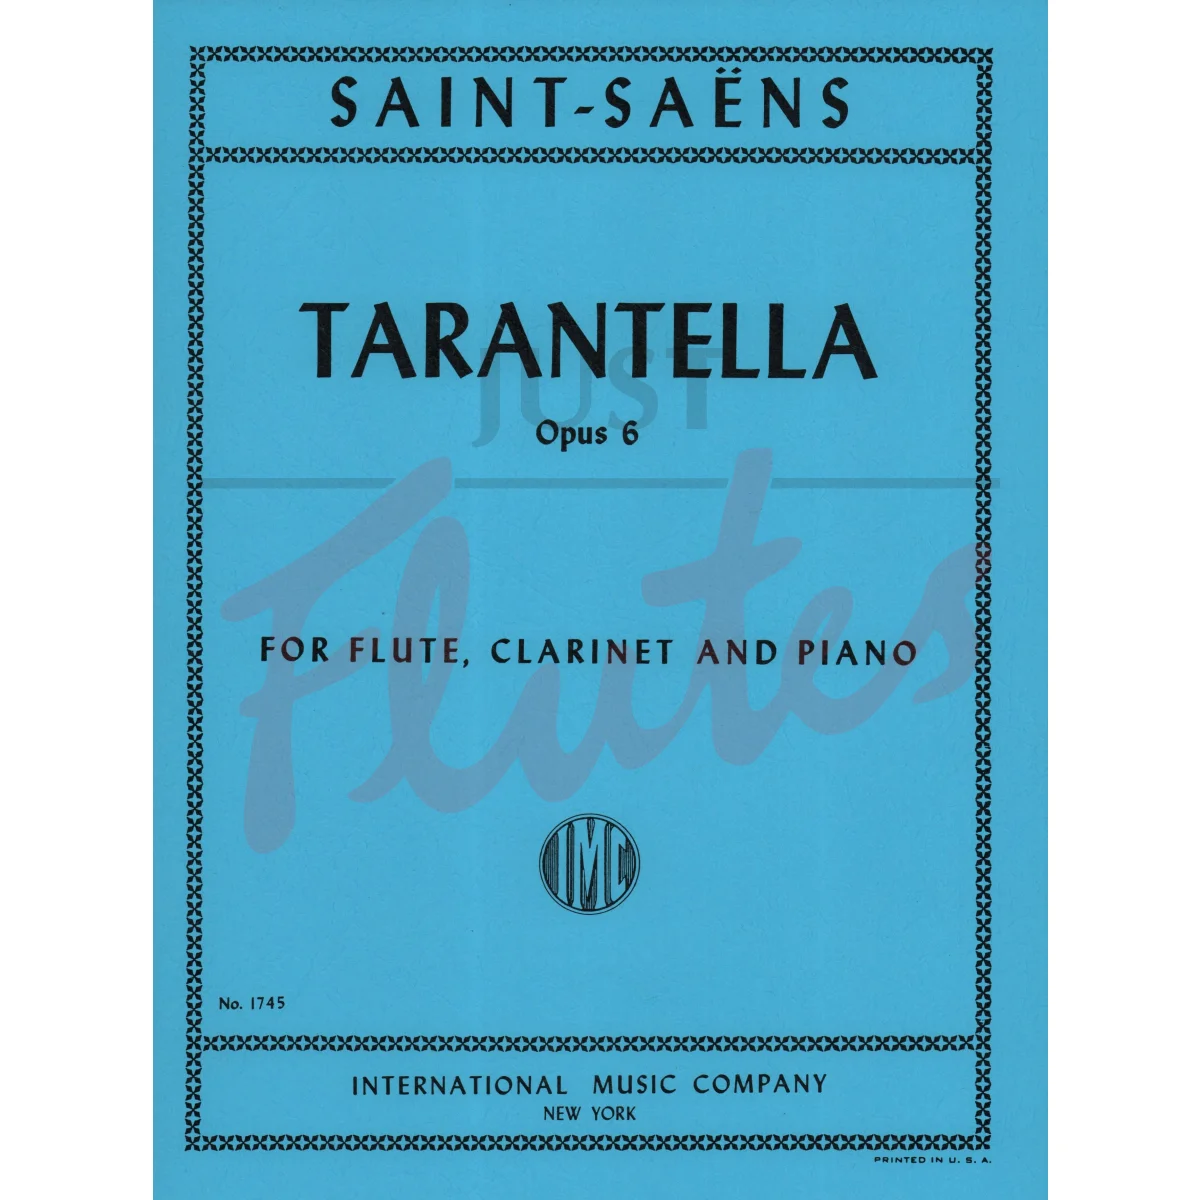 Tarantella for Flute, Clarinet and Piano